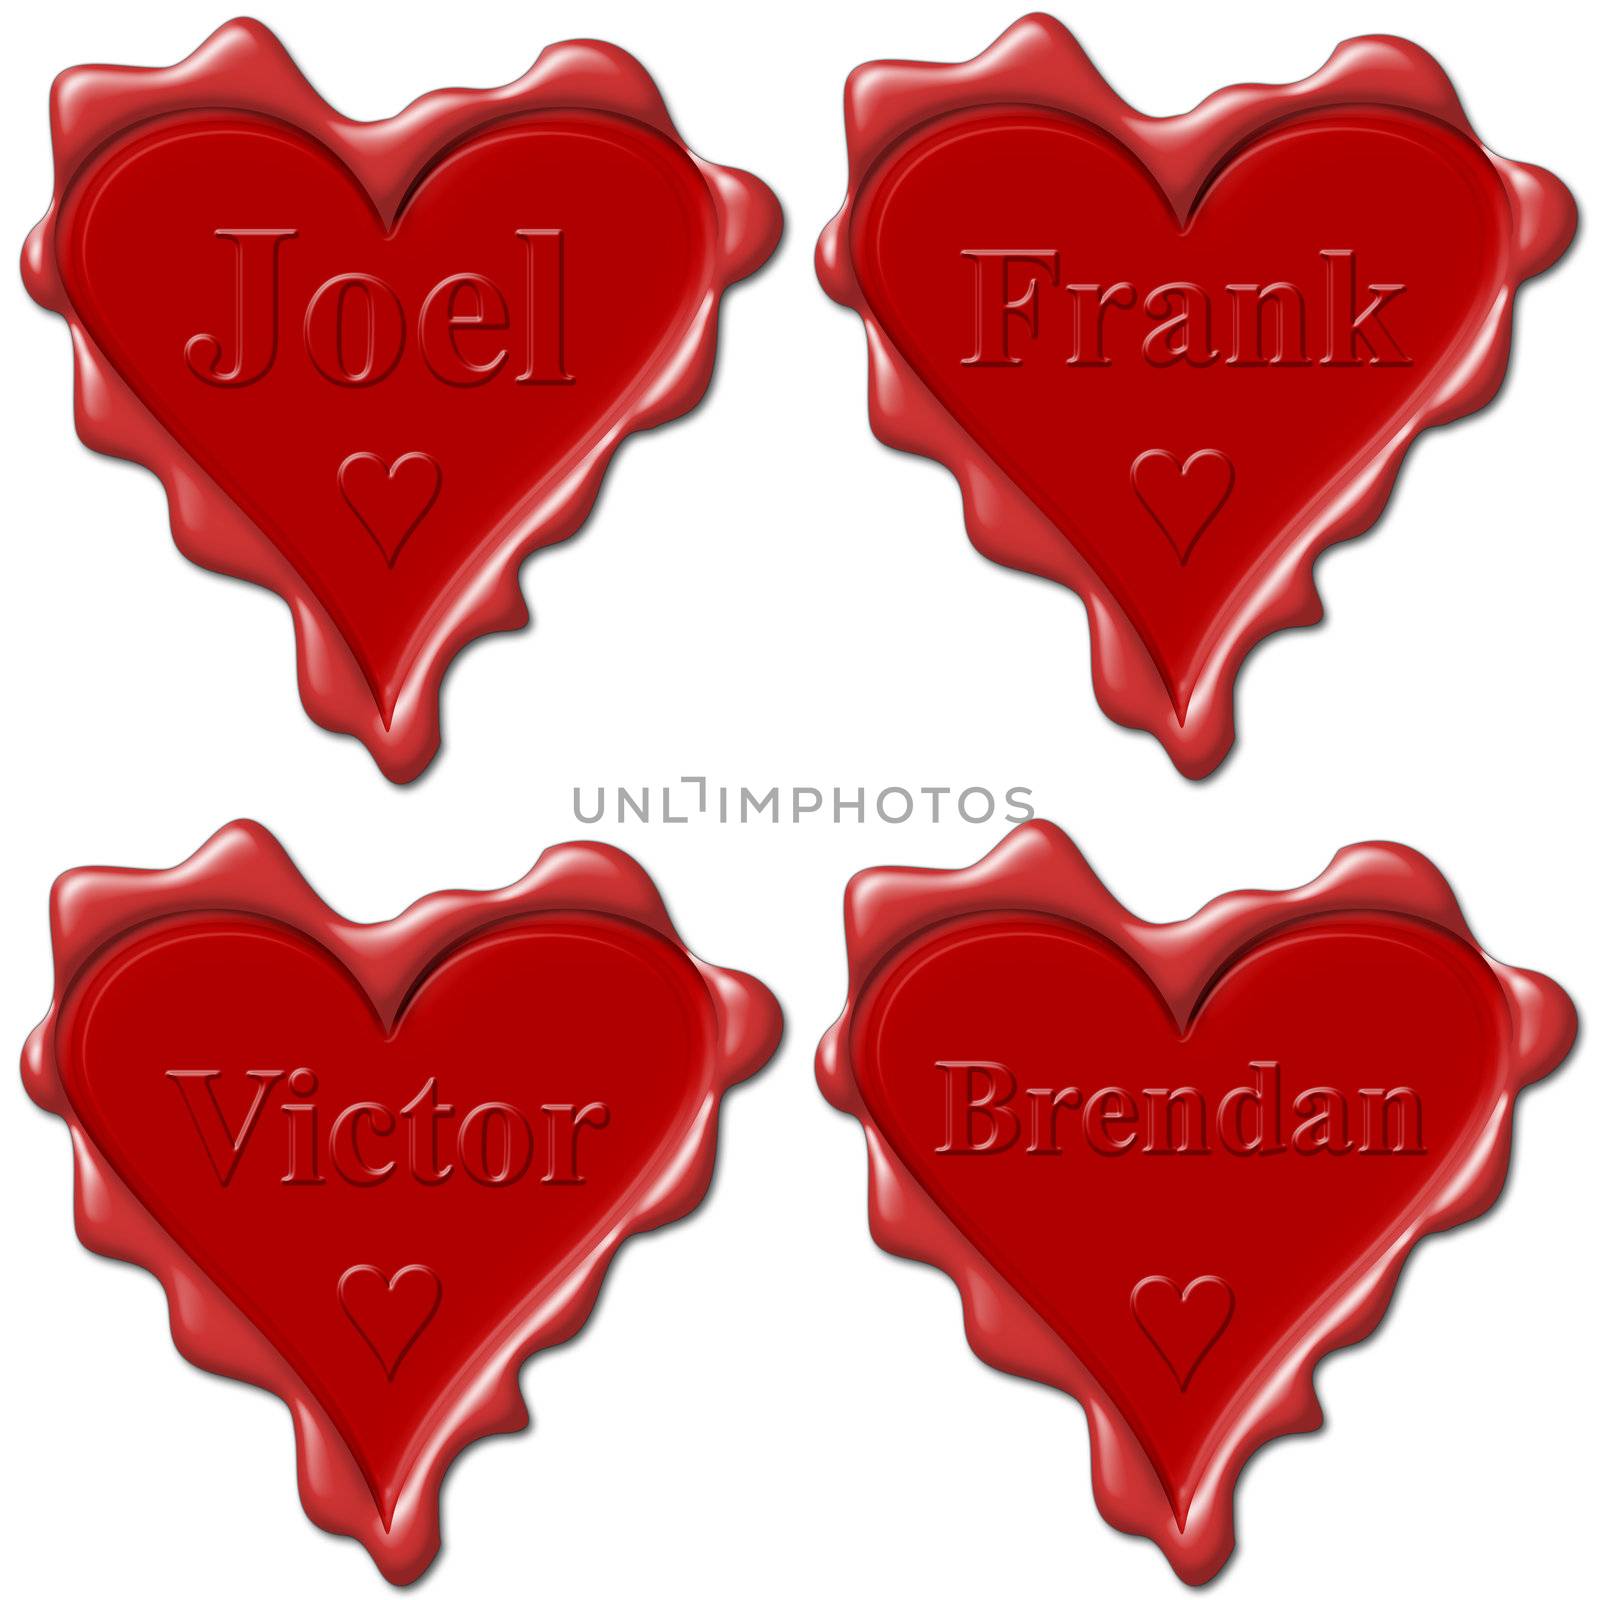 Valentine love hearts with names: Joel, Frank, Victor, Brendan